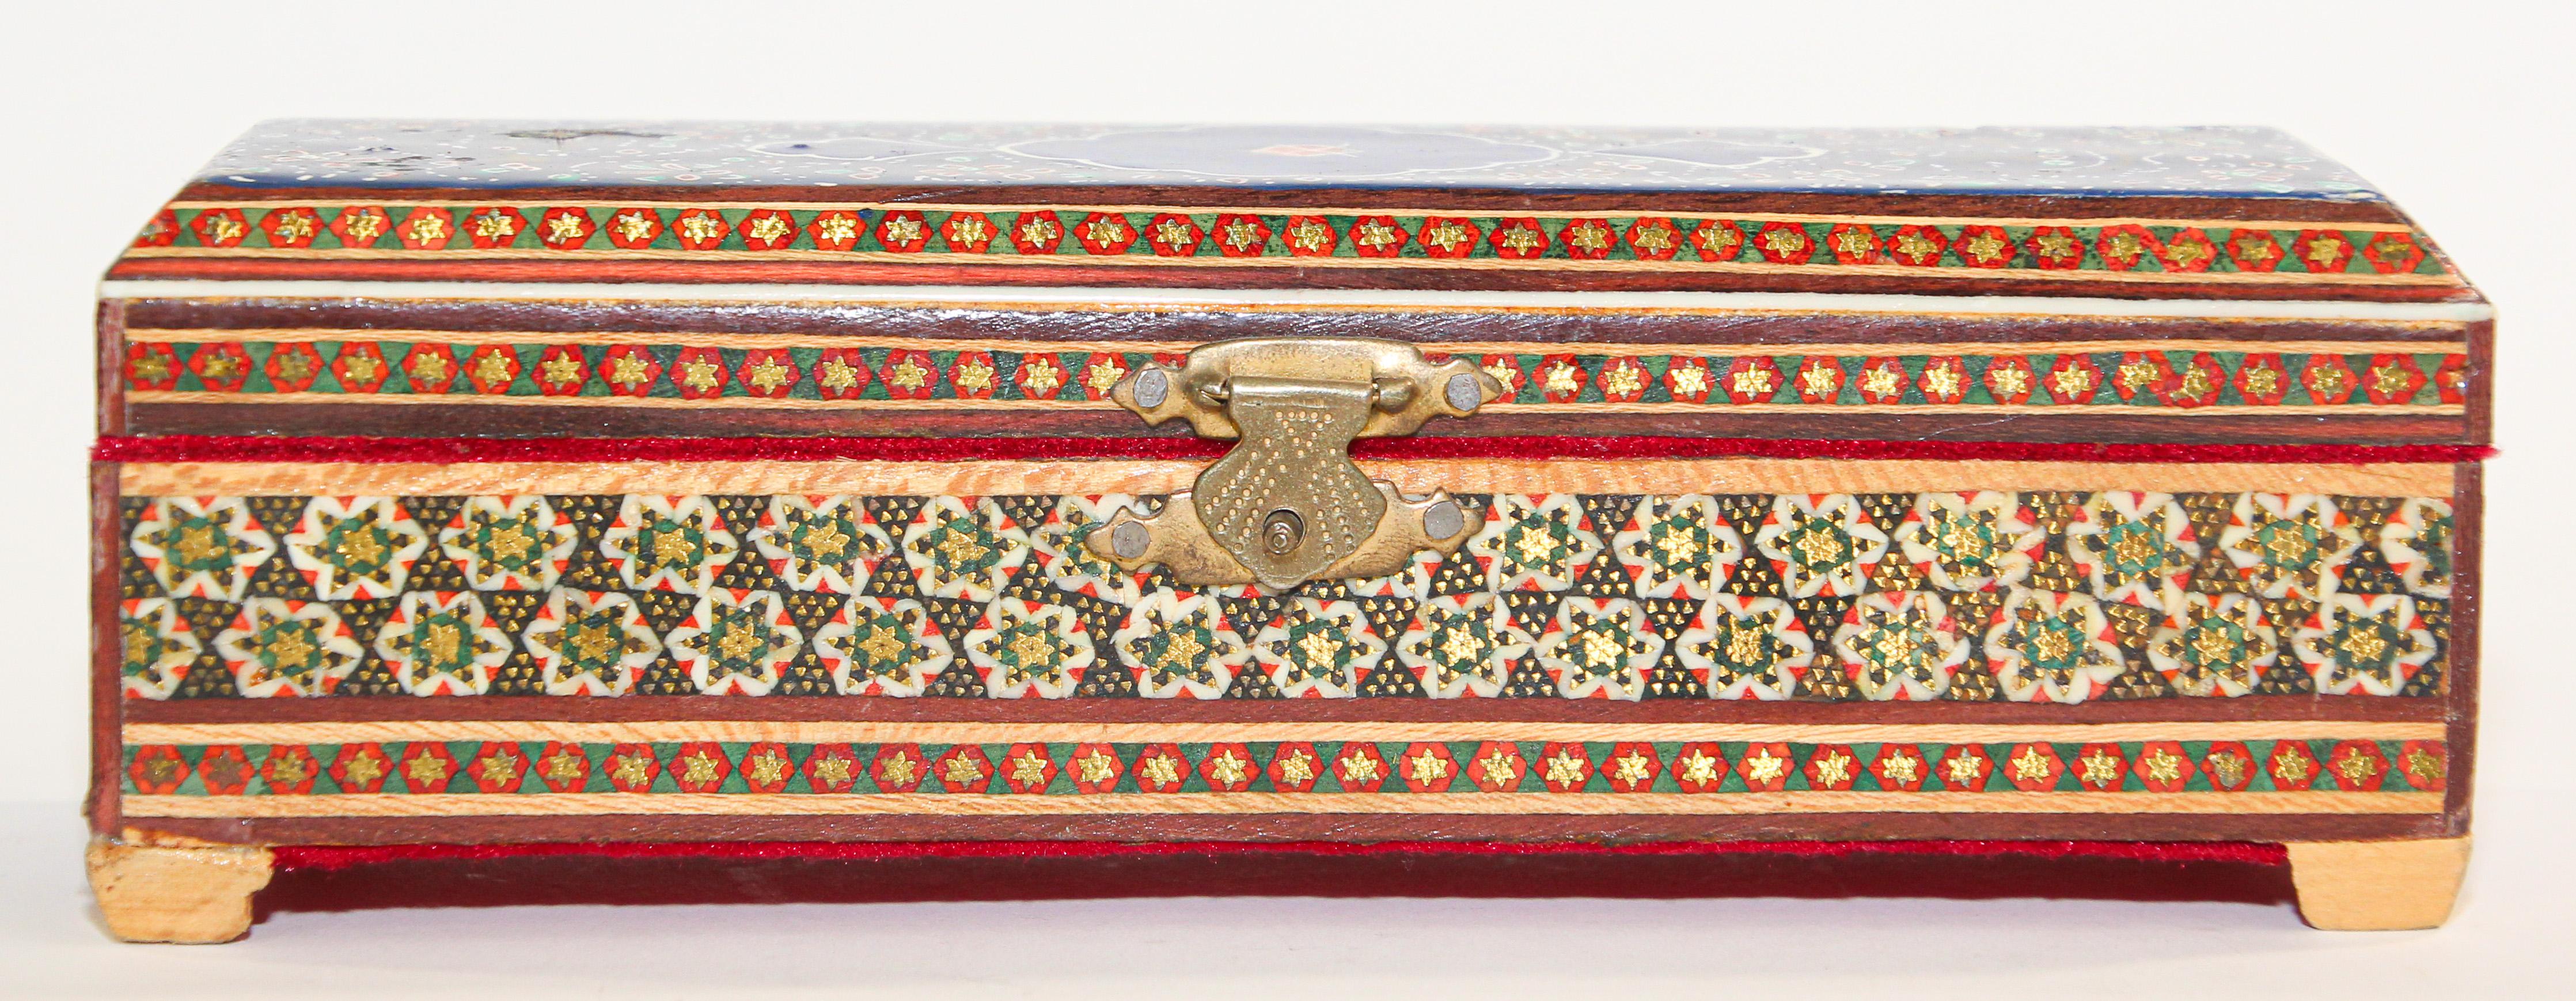 Inlay 1950s Middle Eastern Moorish Inlaid Jewelry Trinket Mosaic Box